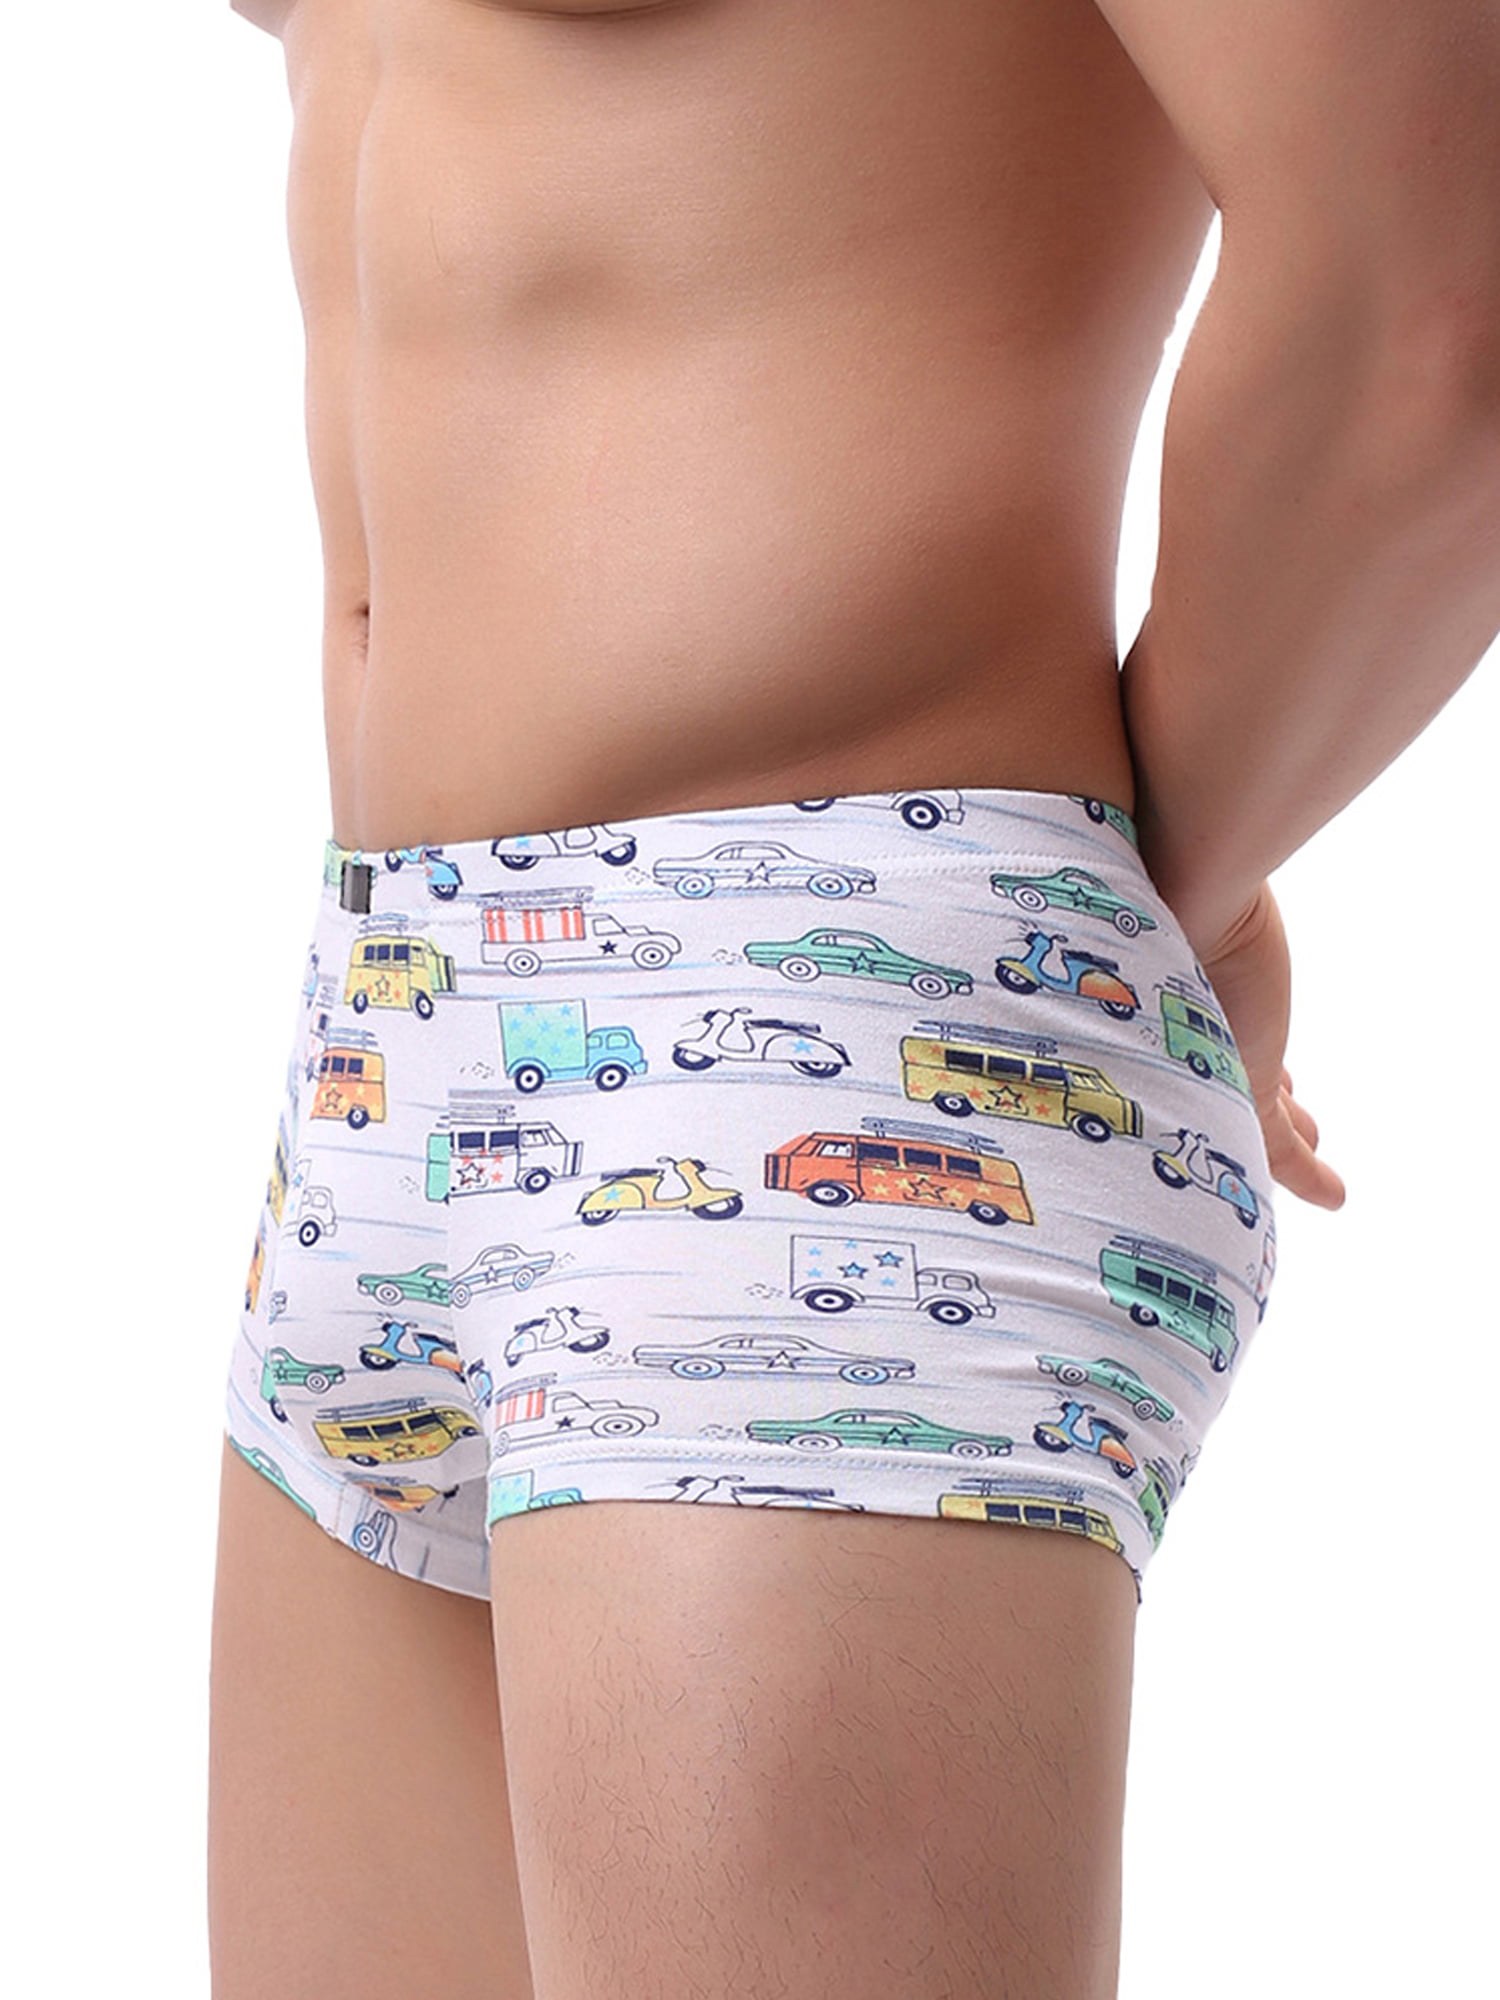 FEIMEN Men's Active Cotton Boxer Briefs Men Cartoon Underwear Boy Shorts  Bikini Sports Fitness Panties Shorts Underpants # D S 